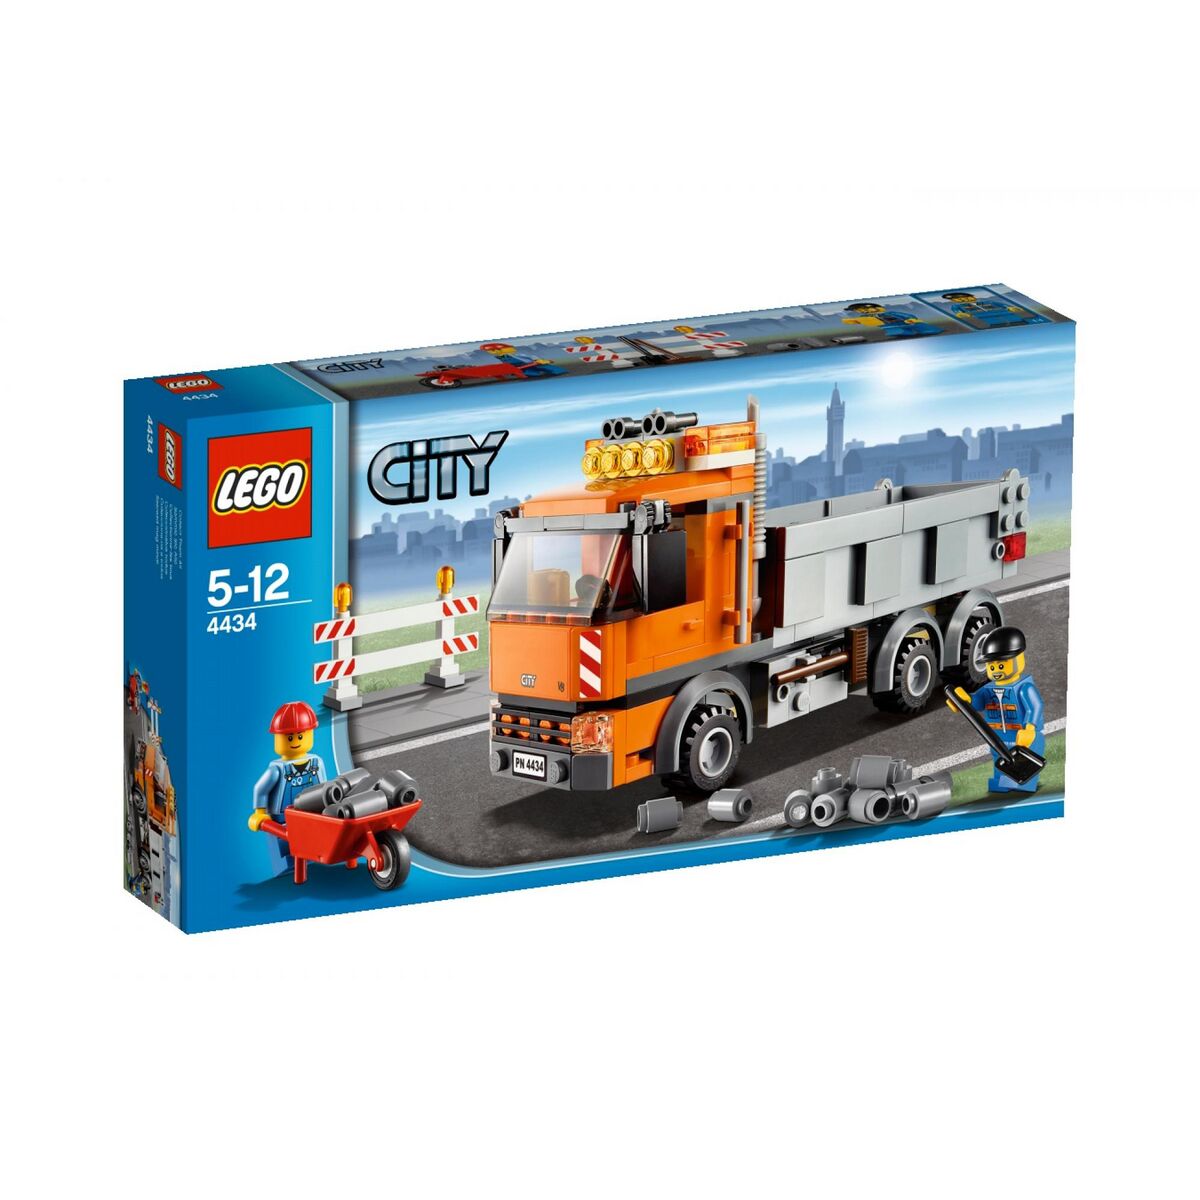 4434 Dump Truck - Brickipedia, the LEGO Wiki